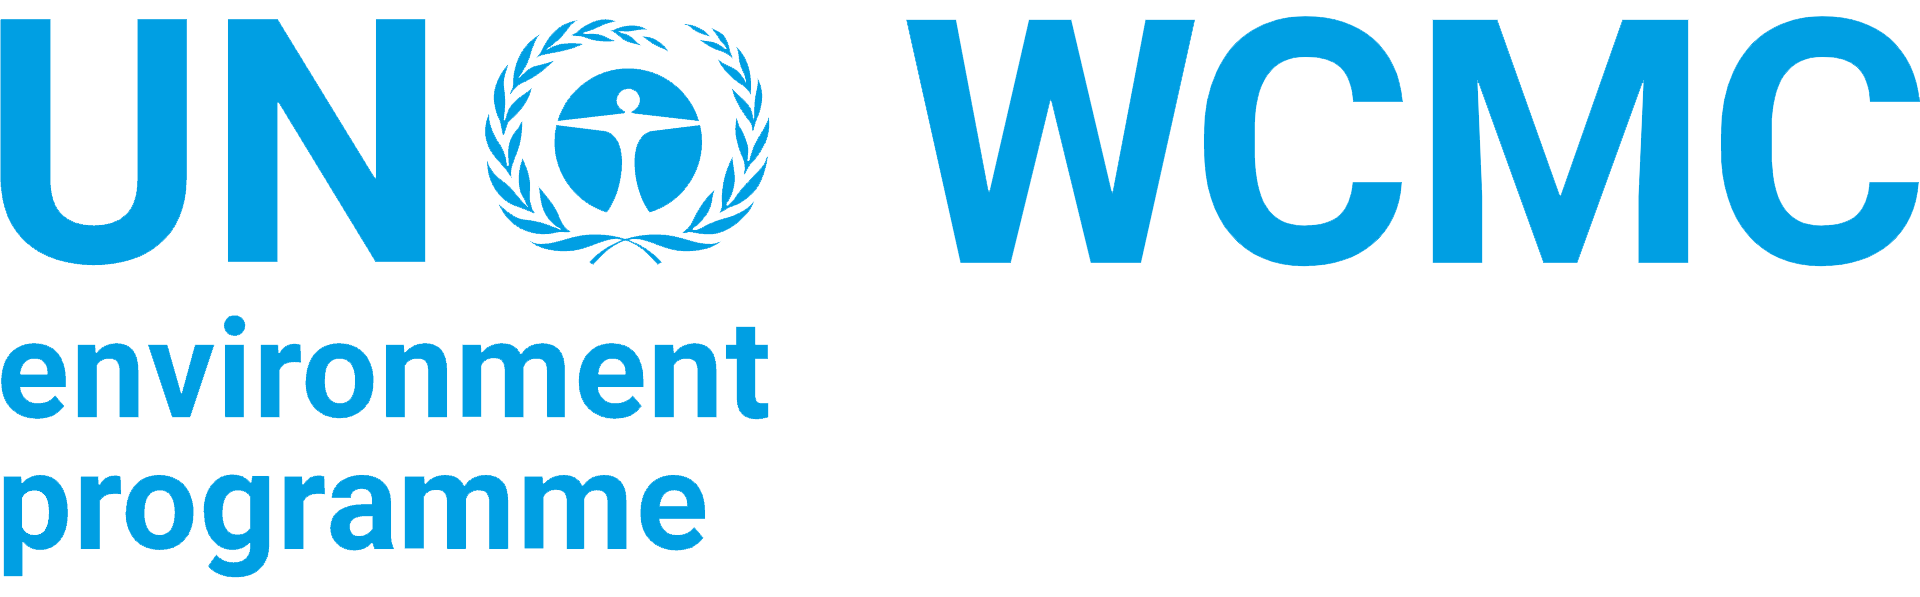 UN Environment Programme World Conservation Monitoring Centre (UNEP-WCMC)